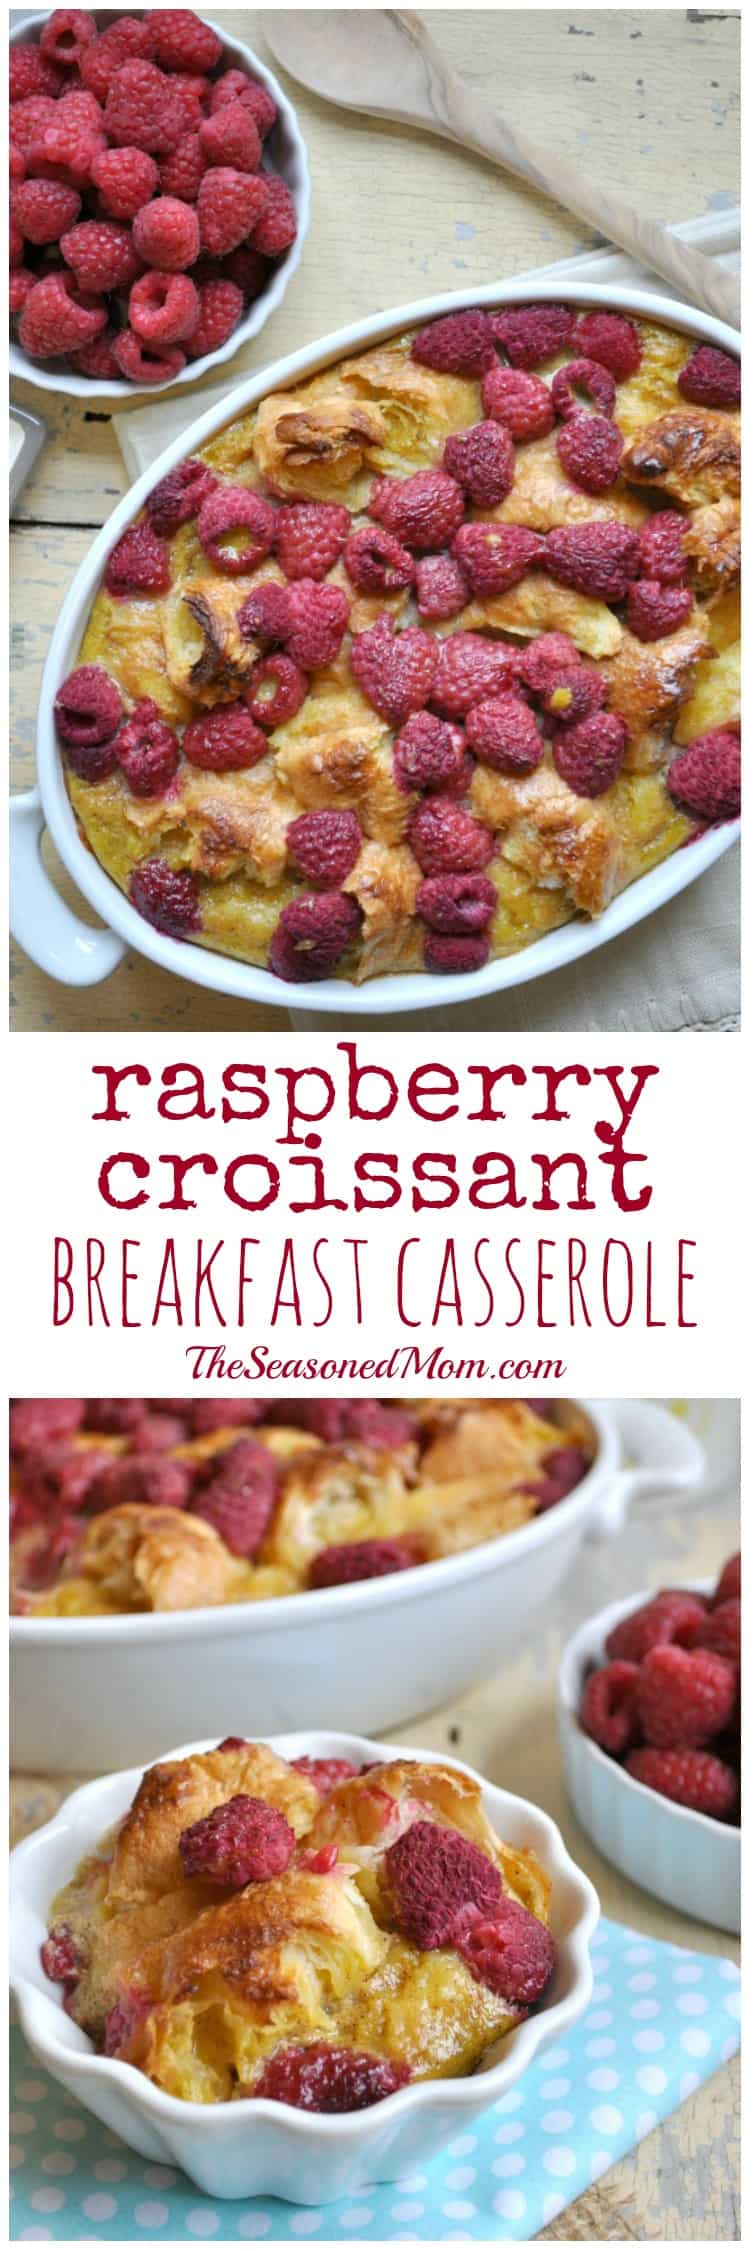 Raspberry Croissant Breakfast Casserole + Mother's Day Gift Ideas ...